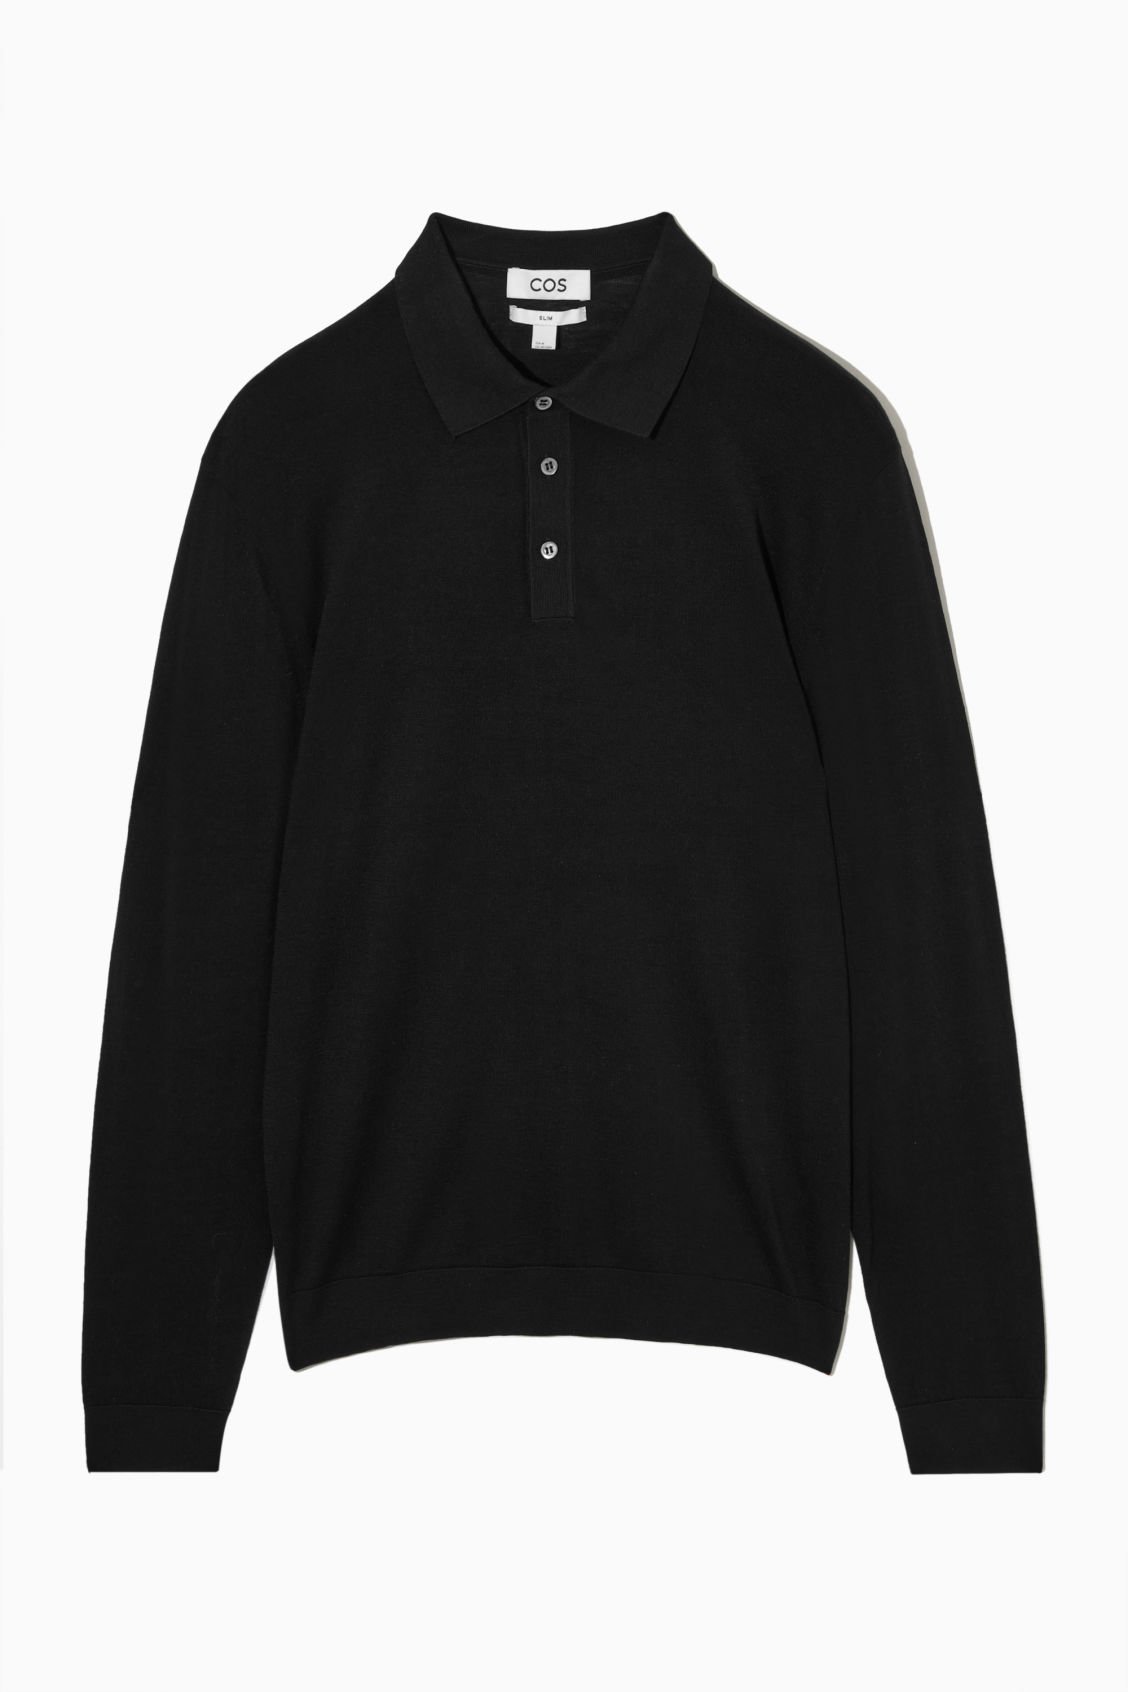 COS Slim-Fit Silk-Blend Polo Shirt in BLACK